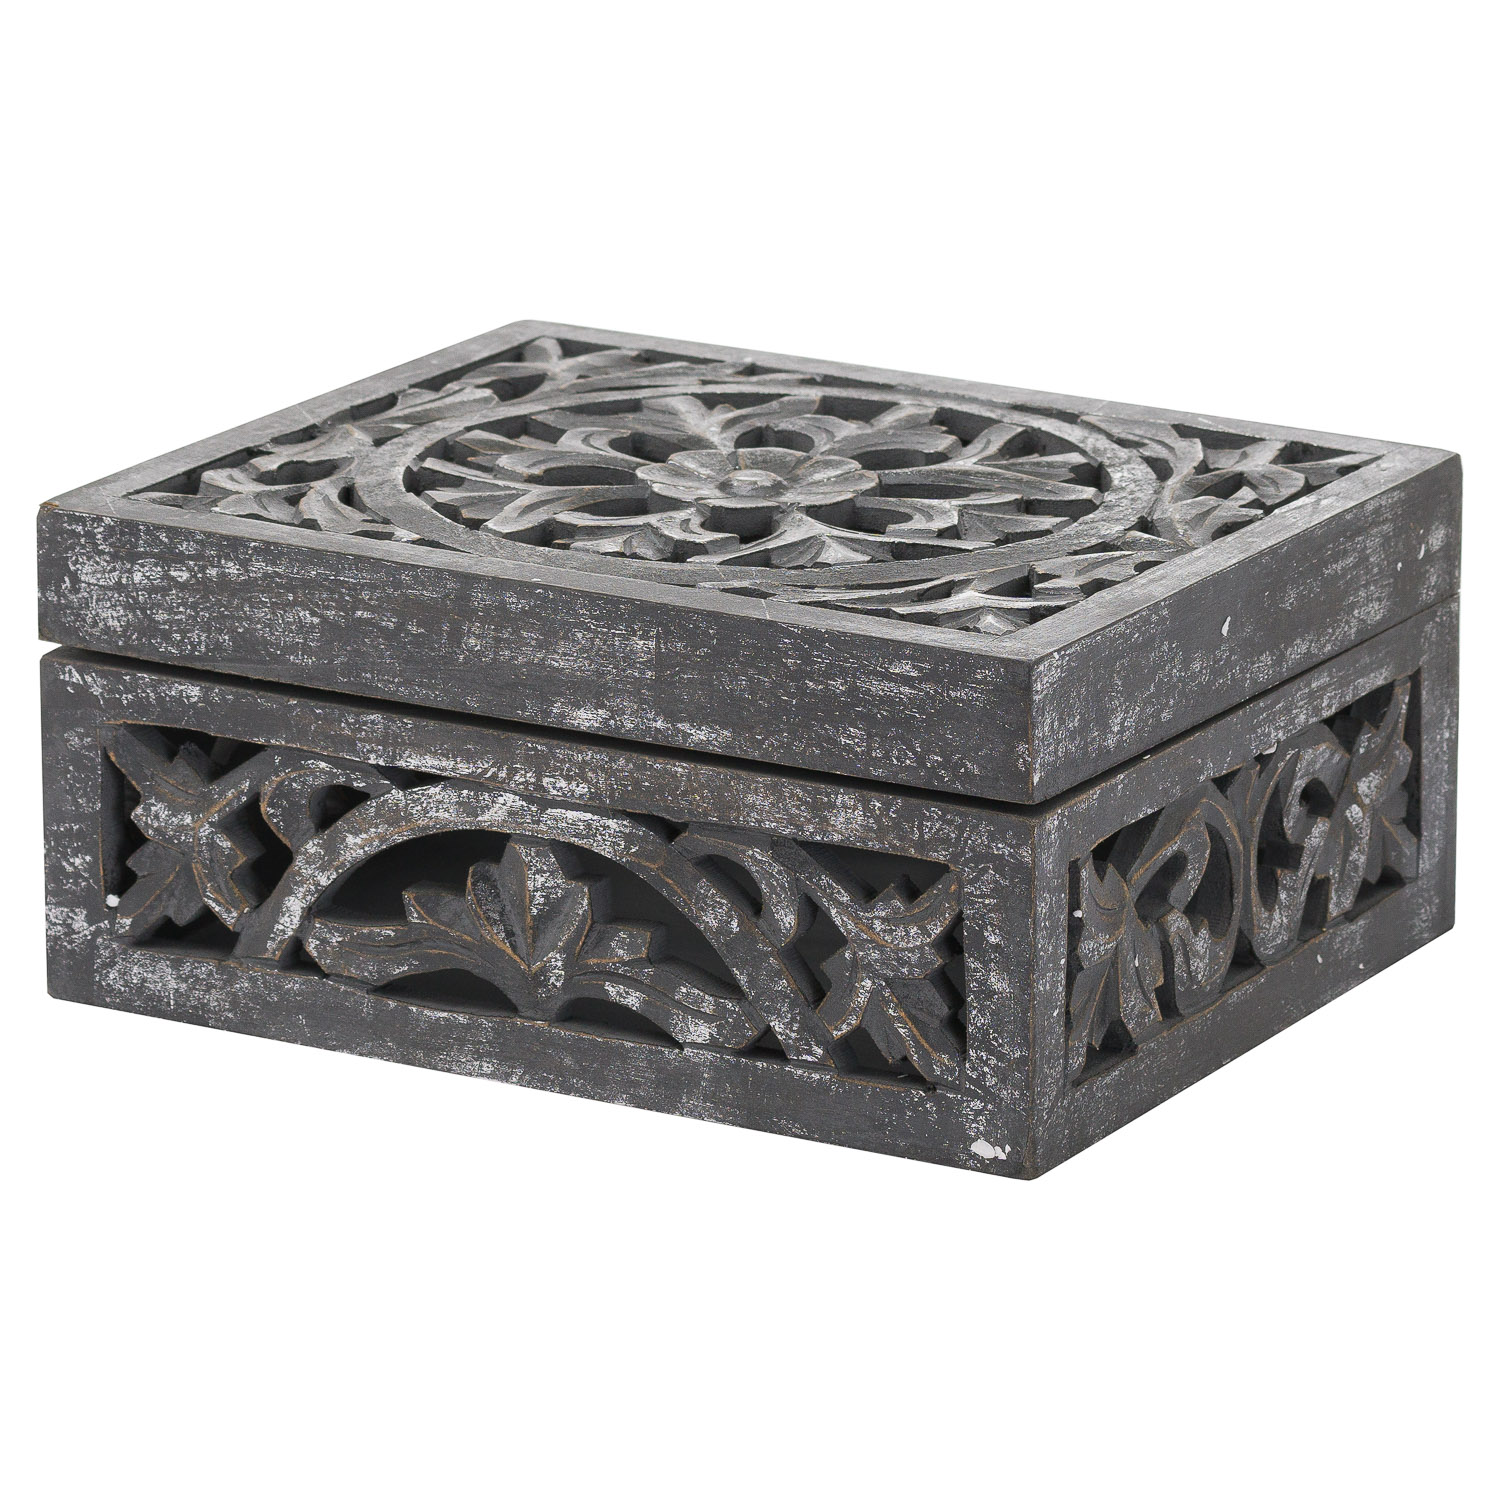 Lustro Carved Antique Metallic Wooden Box - Image 1